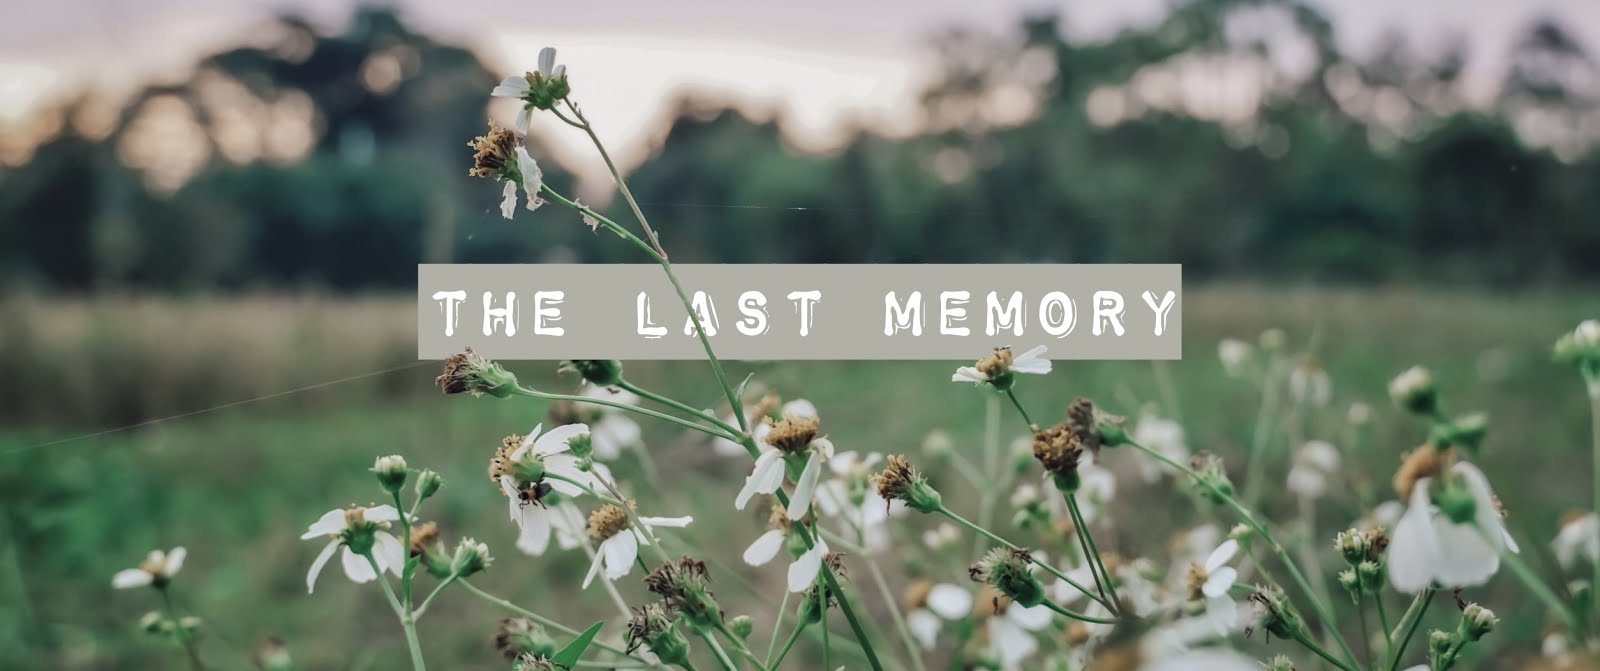 The last memory